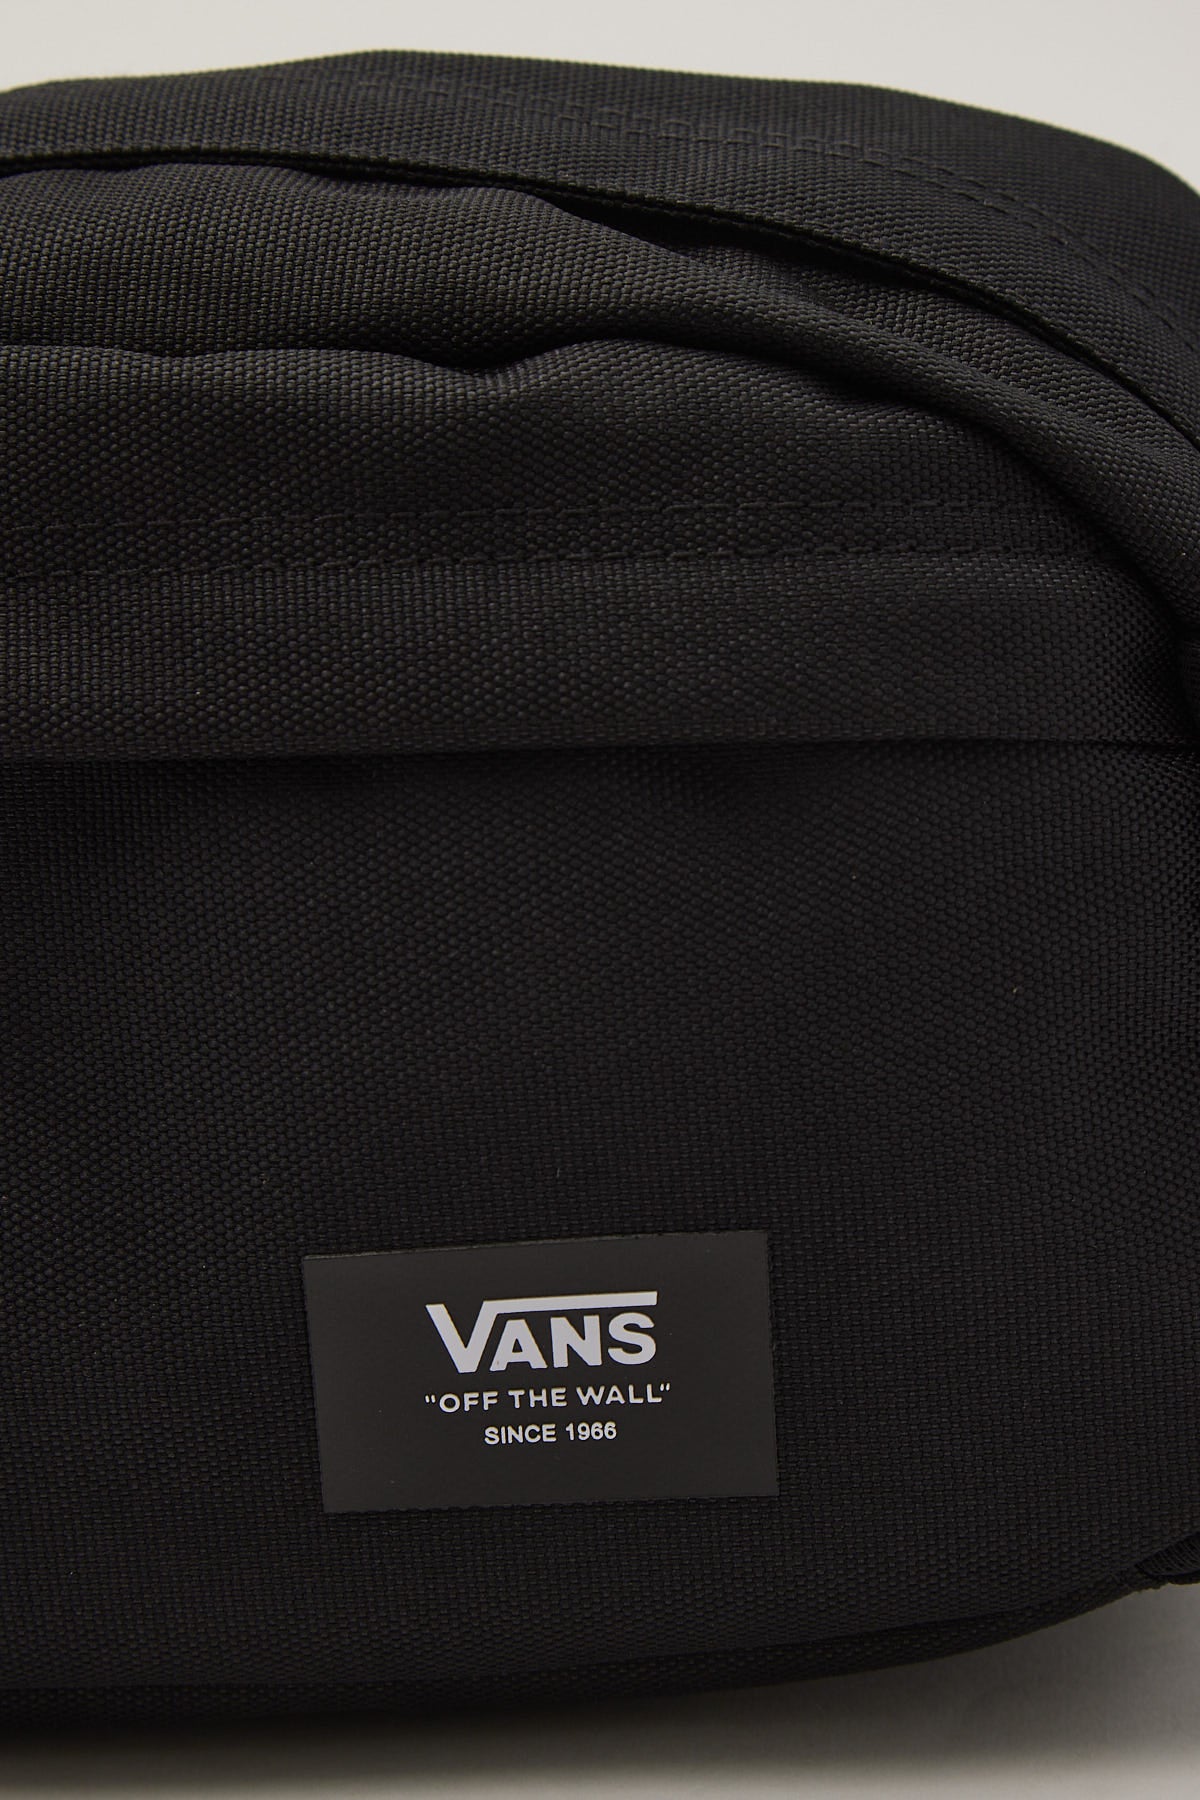 Vans Bounds Crossbody Bag Black